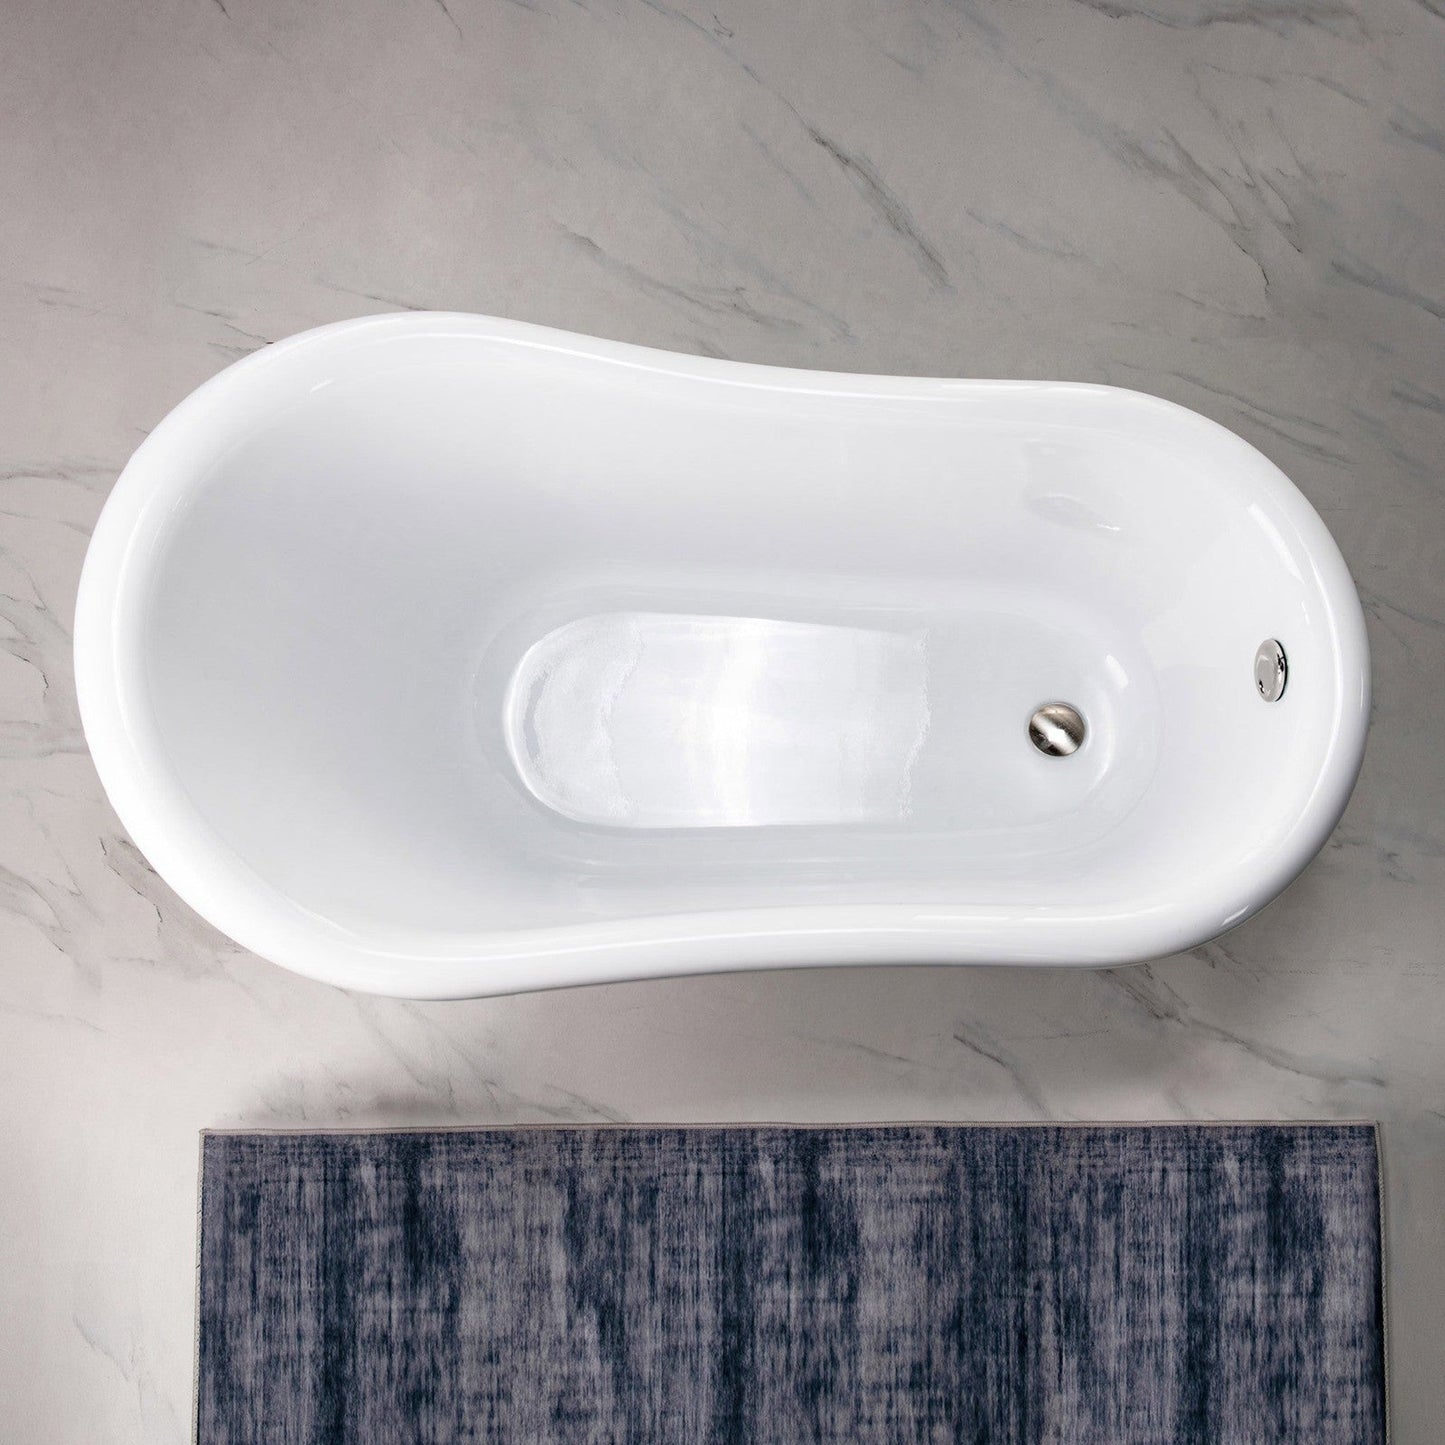 WoodBridge 54" White Acrylic Slipper Clawfoot Bath Tub With Brushed Nickel Feet, Drain, Overflow, F0070BNVT Tub Filler and Caddy Tray